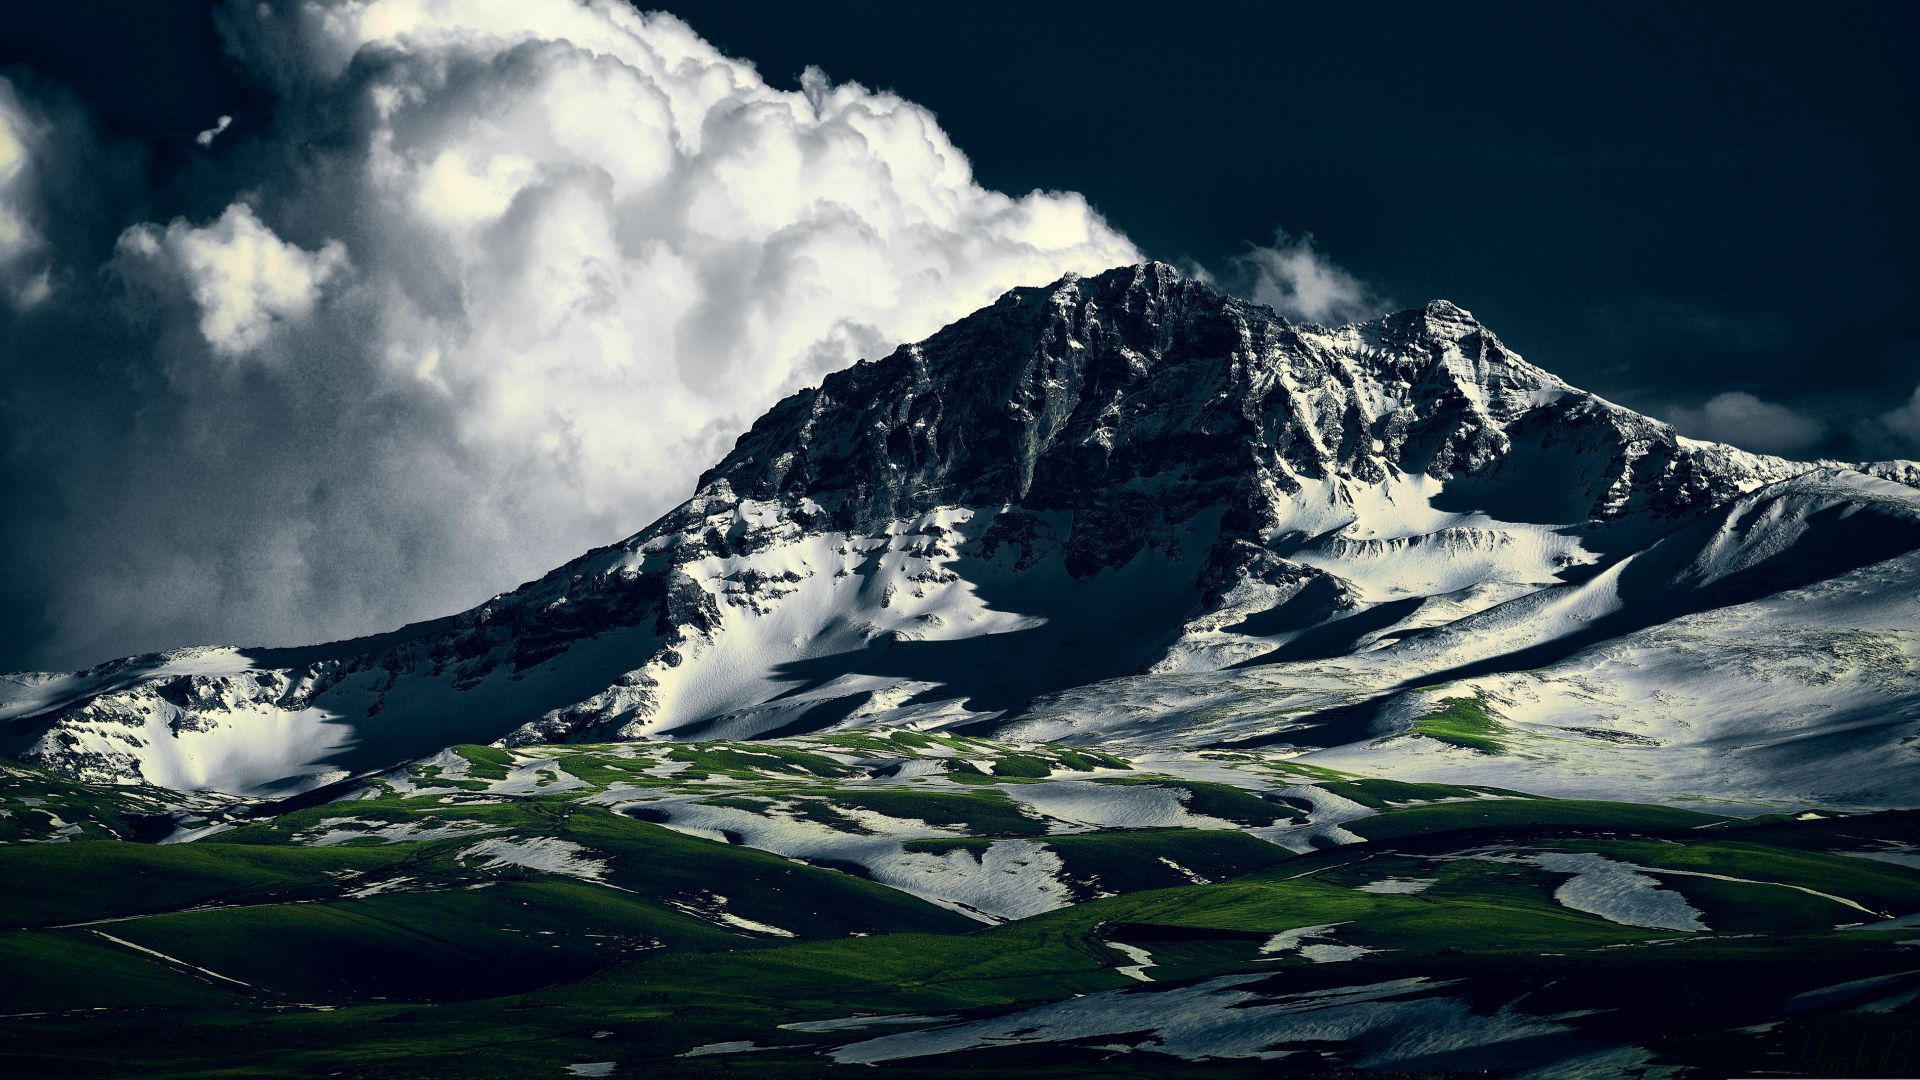 Арагац, 5k, 4k, Армения, горы, облака, Aragats, 5k, 4k wallpaper, Armenia, mountains, clouds (horizontal)